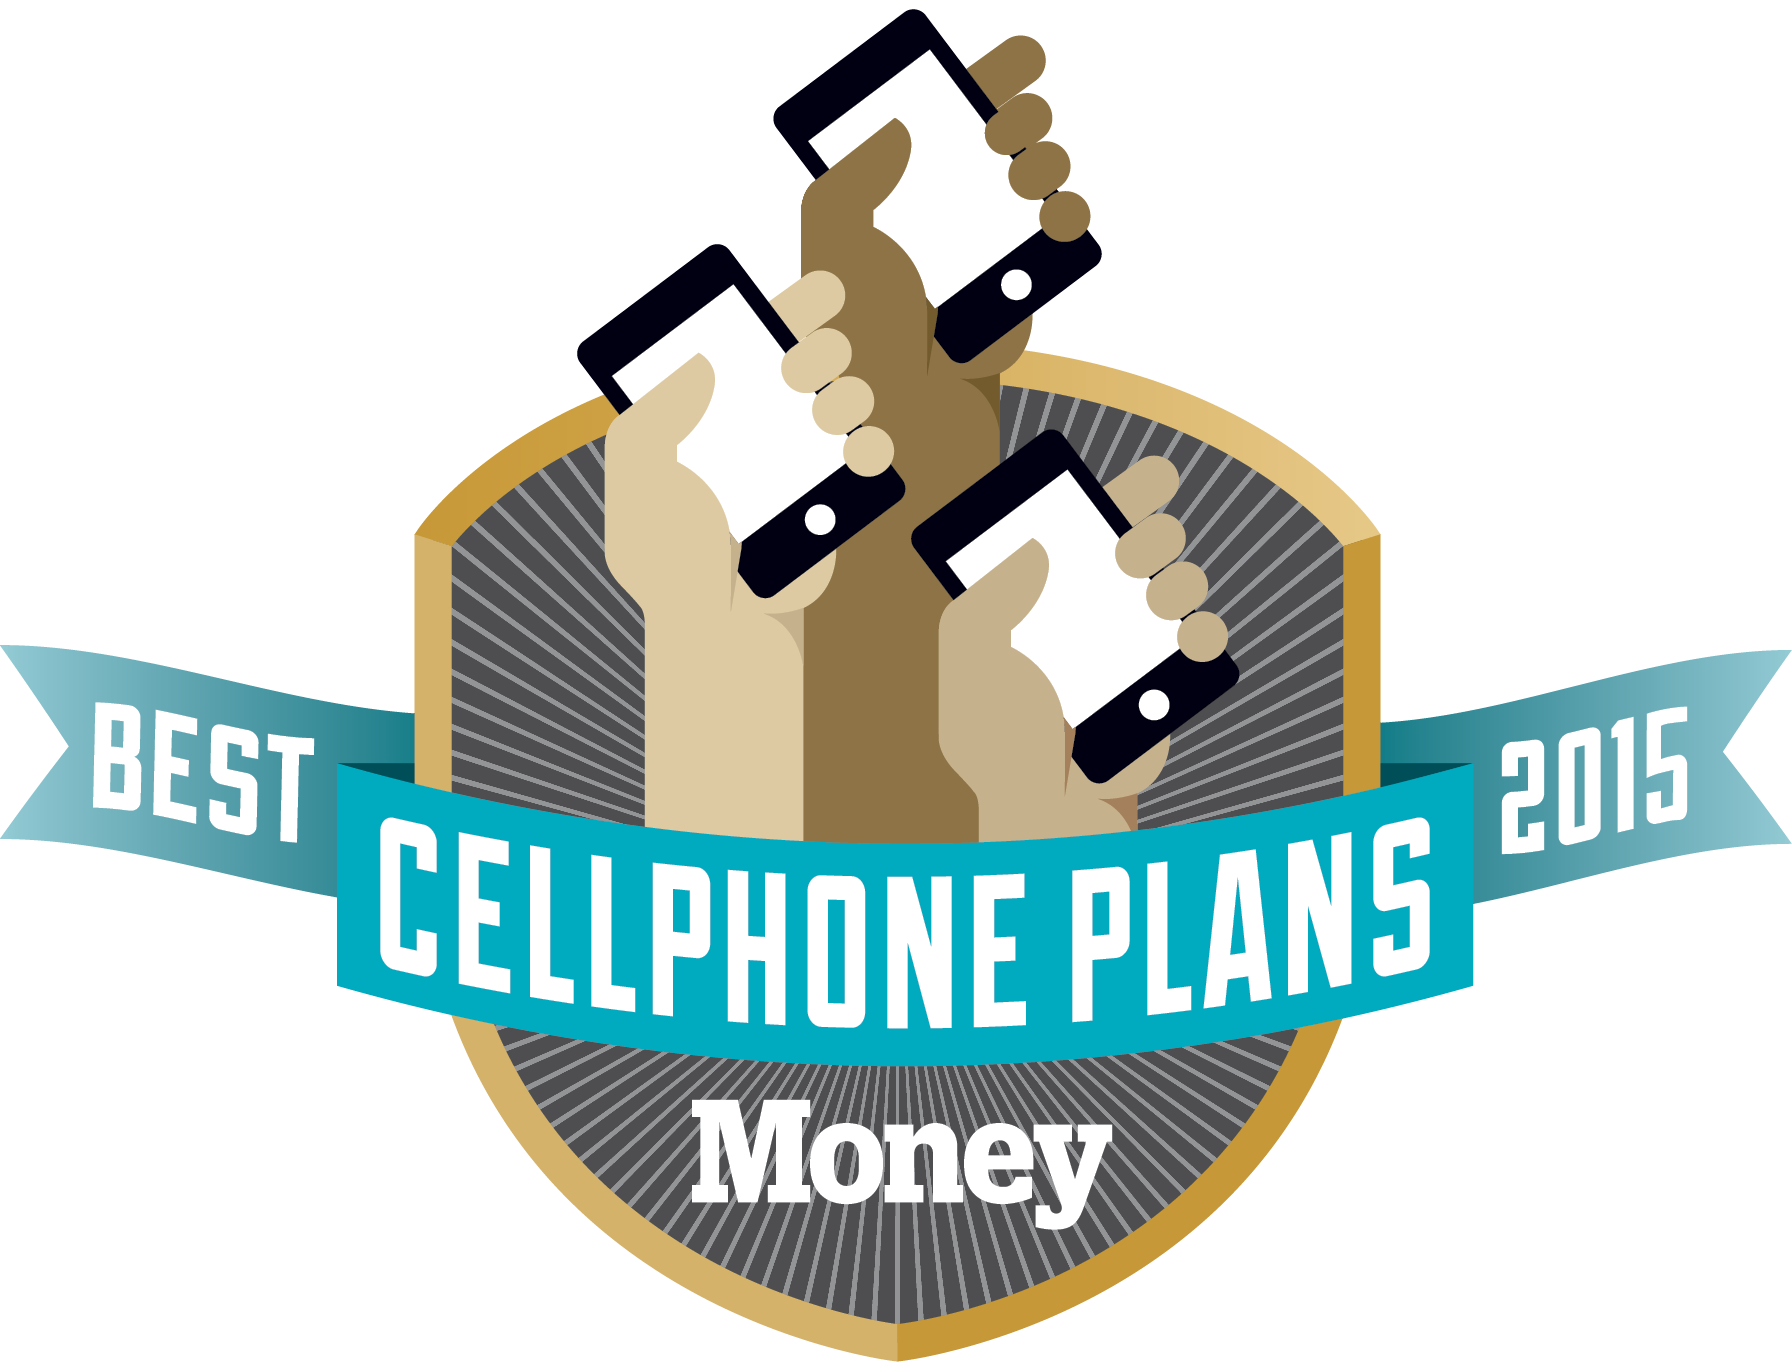 0915_CEL_best plan_franchise logo